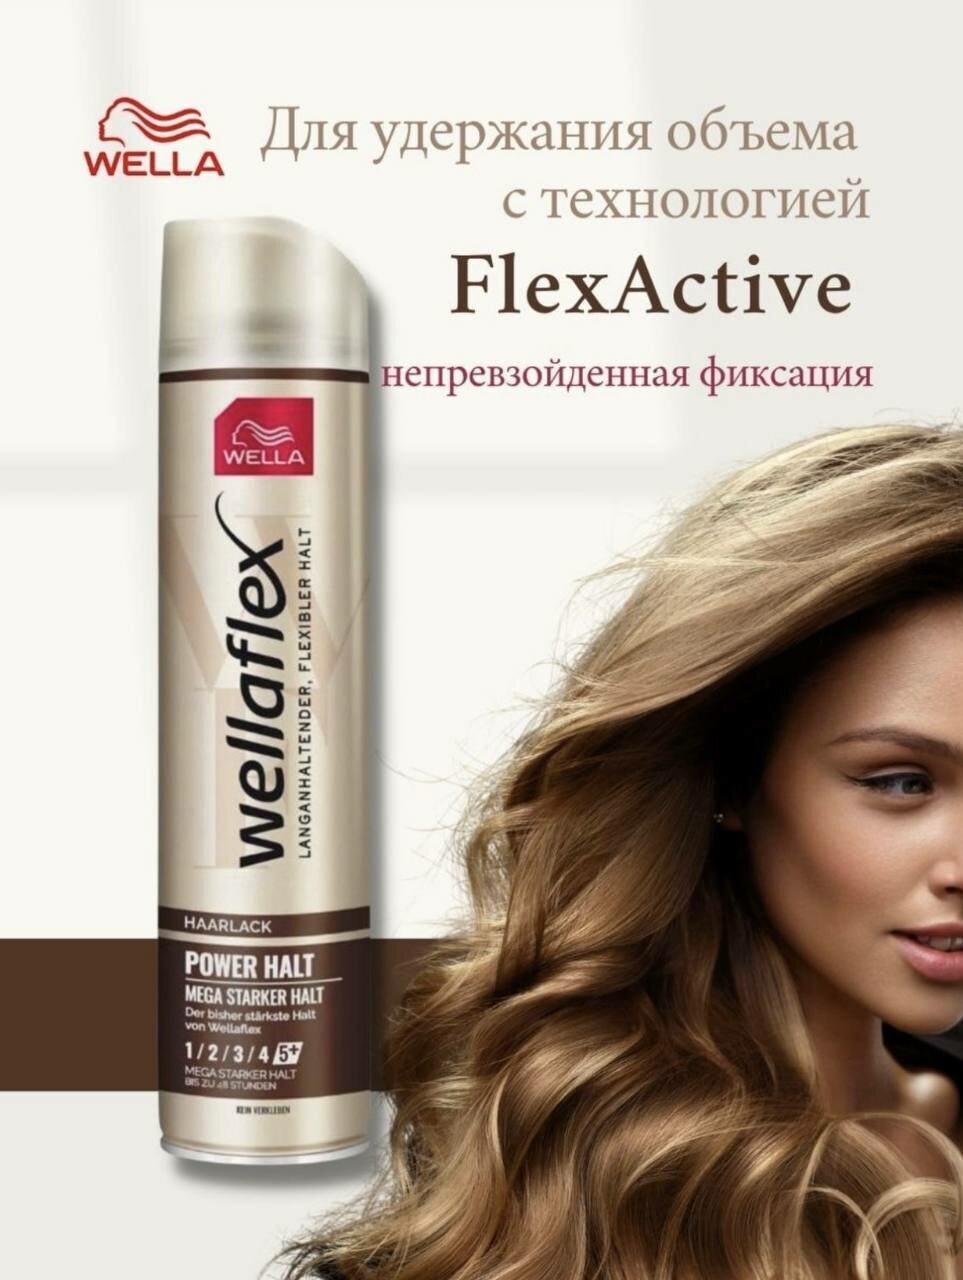 Лак для волос "Wella Wellaflex", объем до 2-х дней, 250 мл.